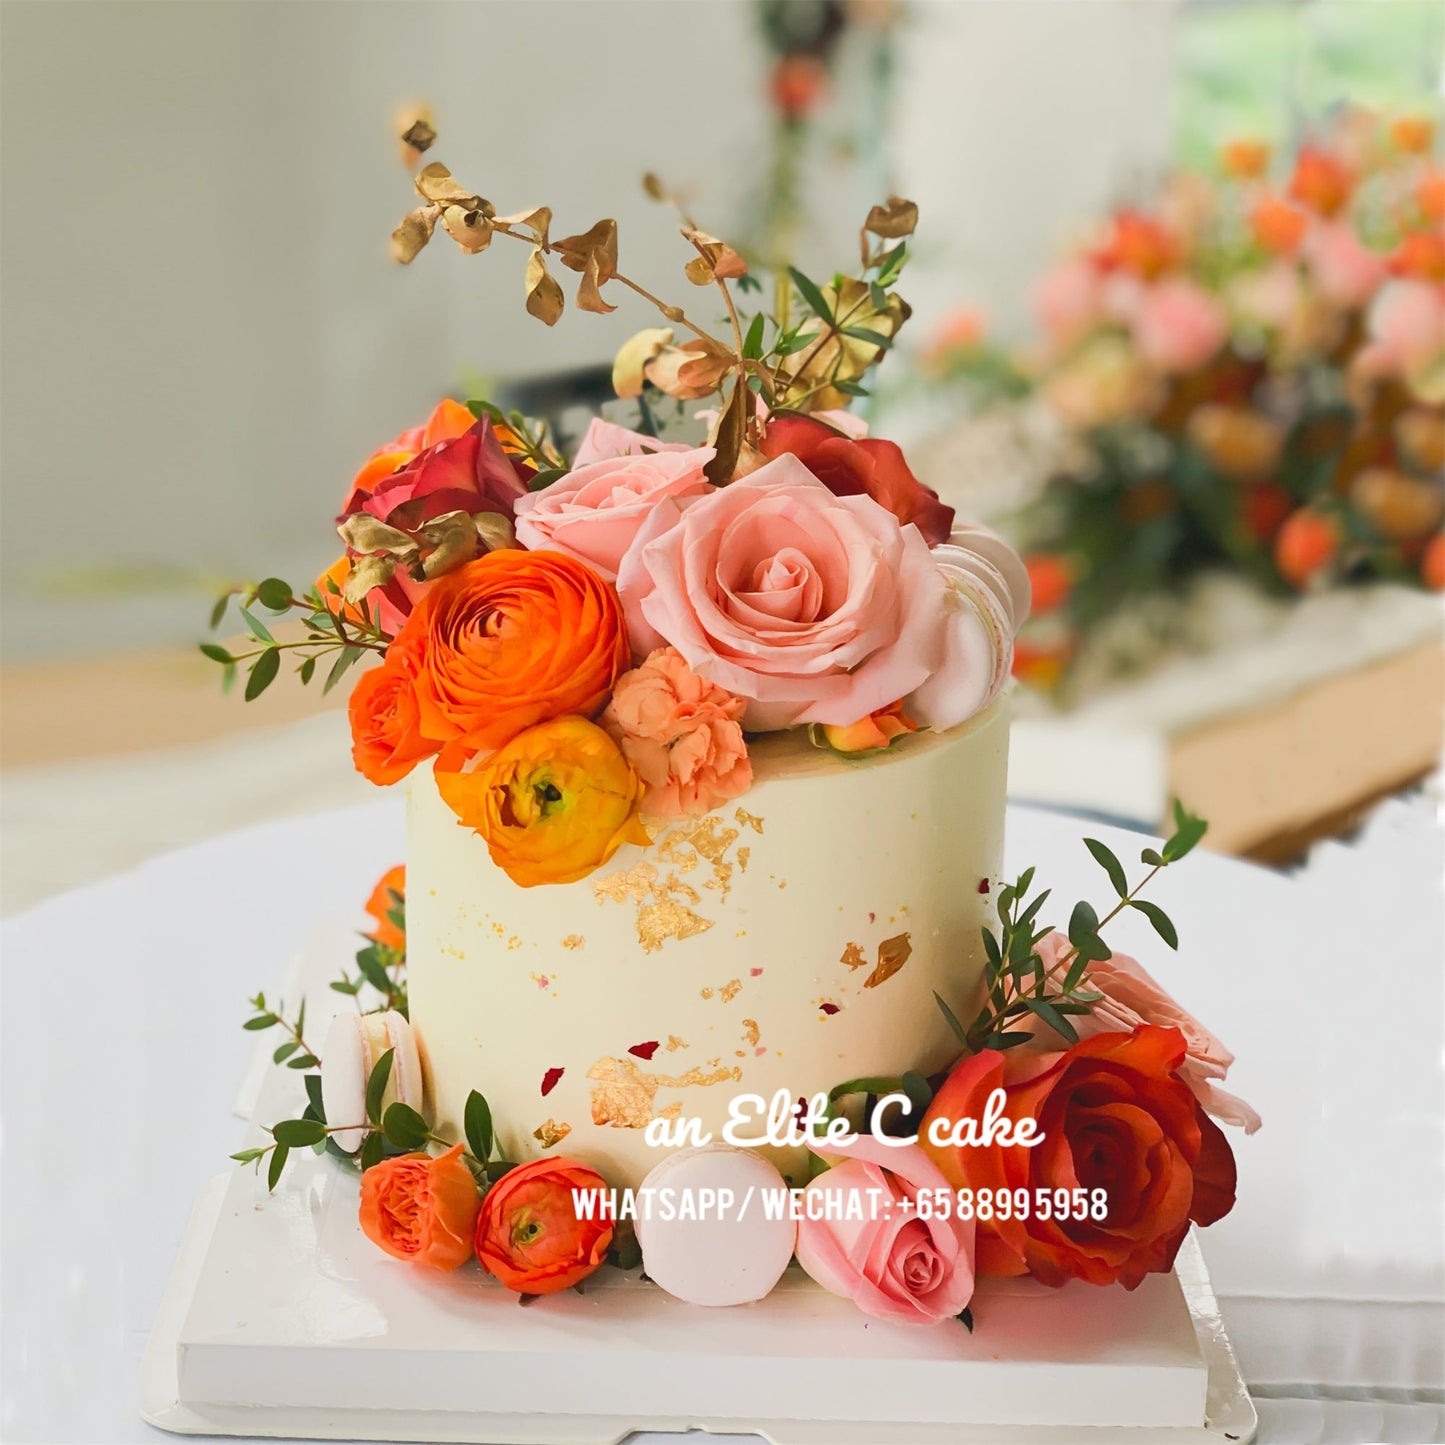 Floral Cake: Enchanted Rose